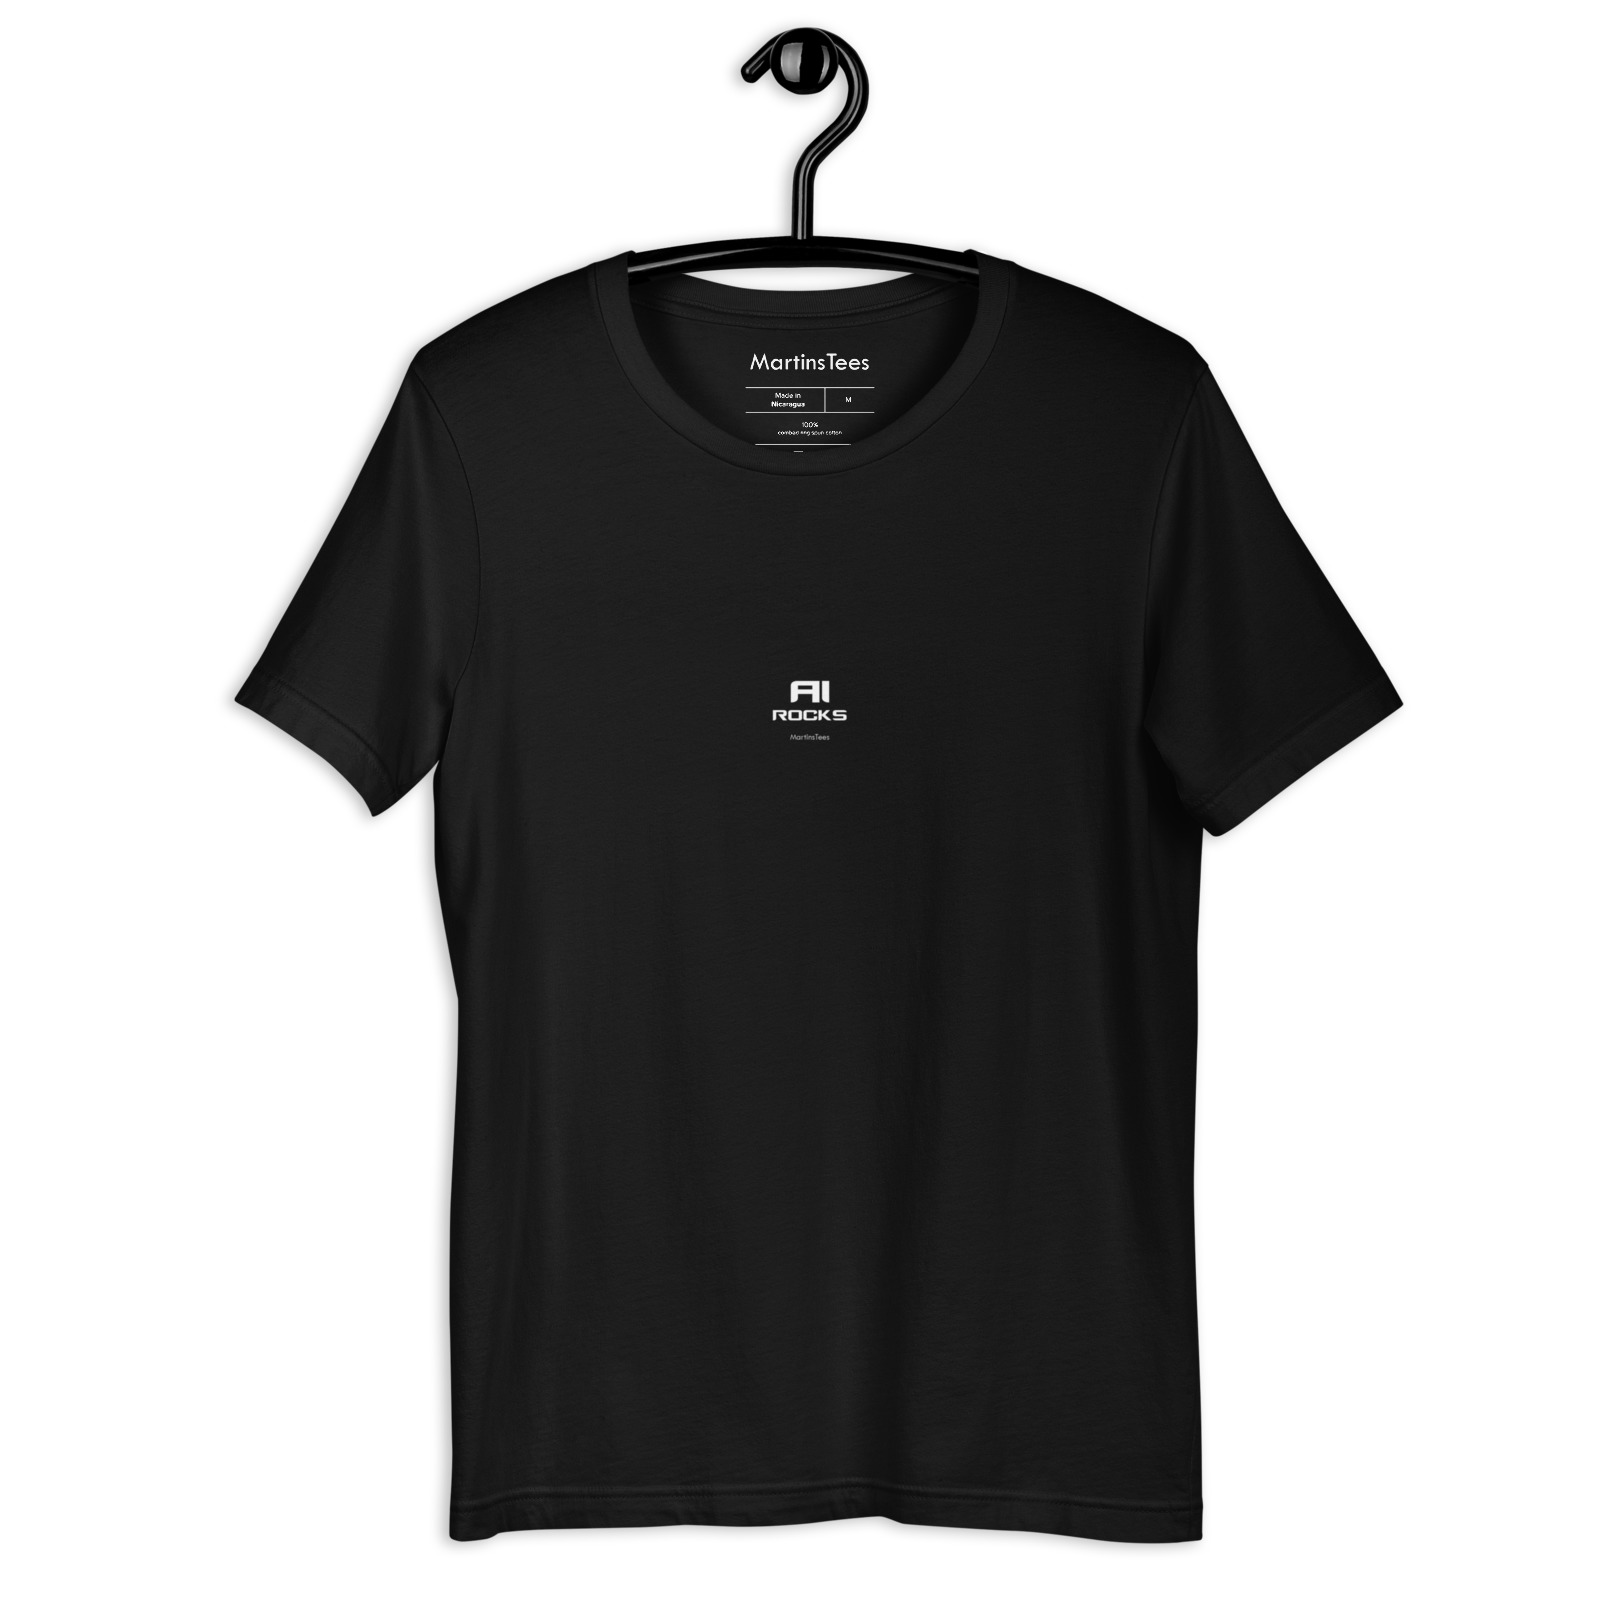 T-shirt: AI - ROCKS